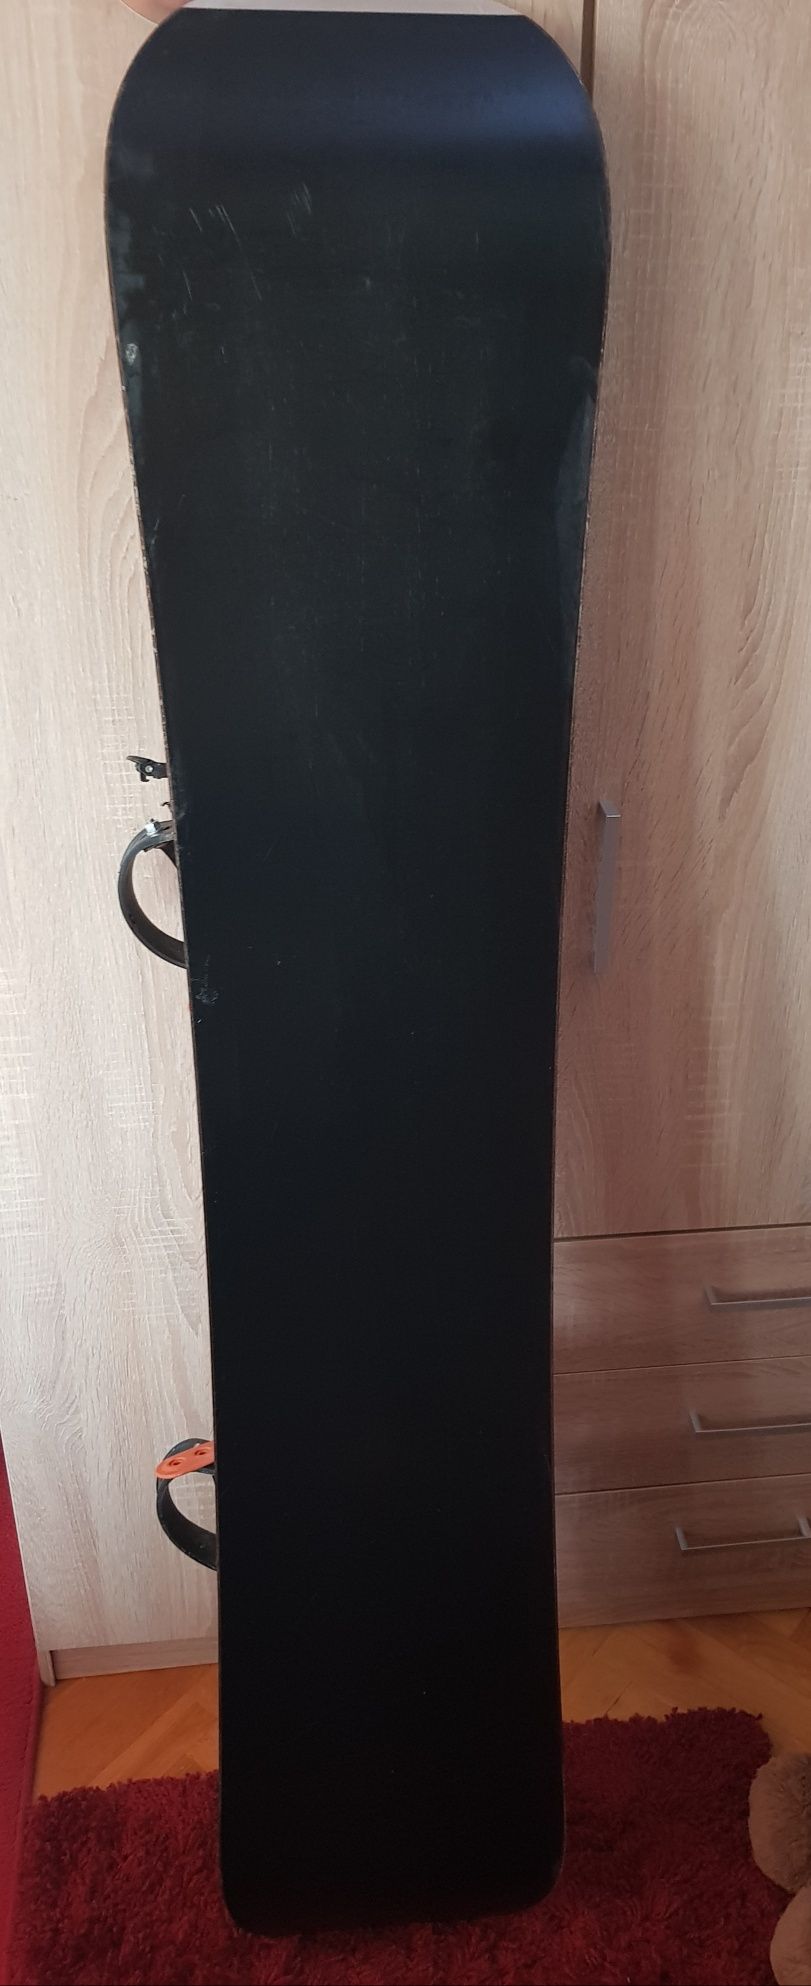 Placa  snowboards hammer lungime 1.54  m